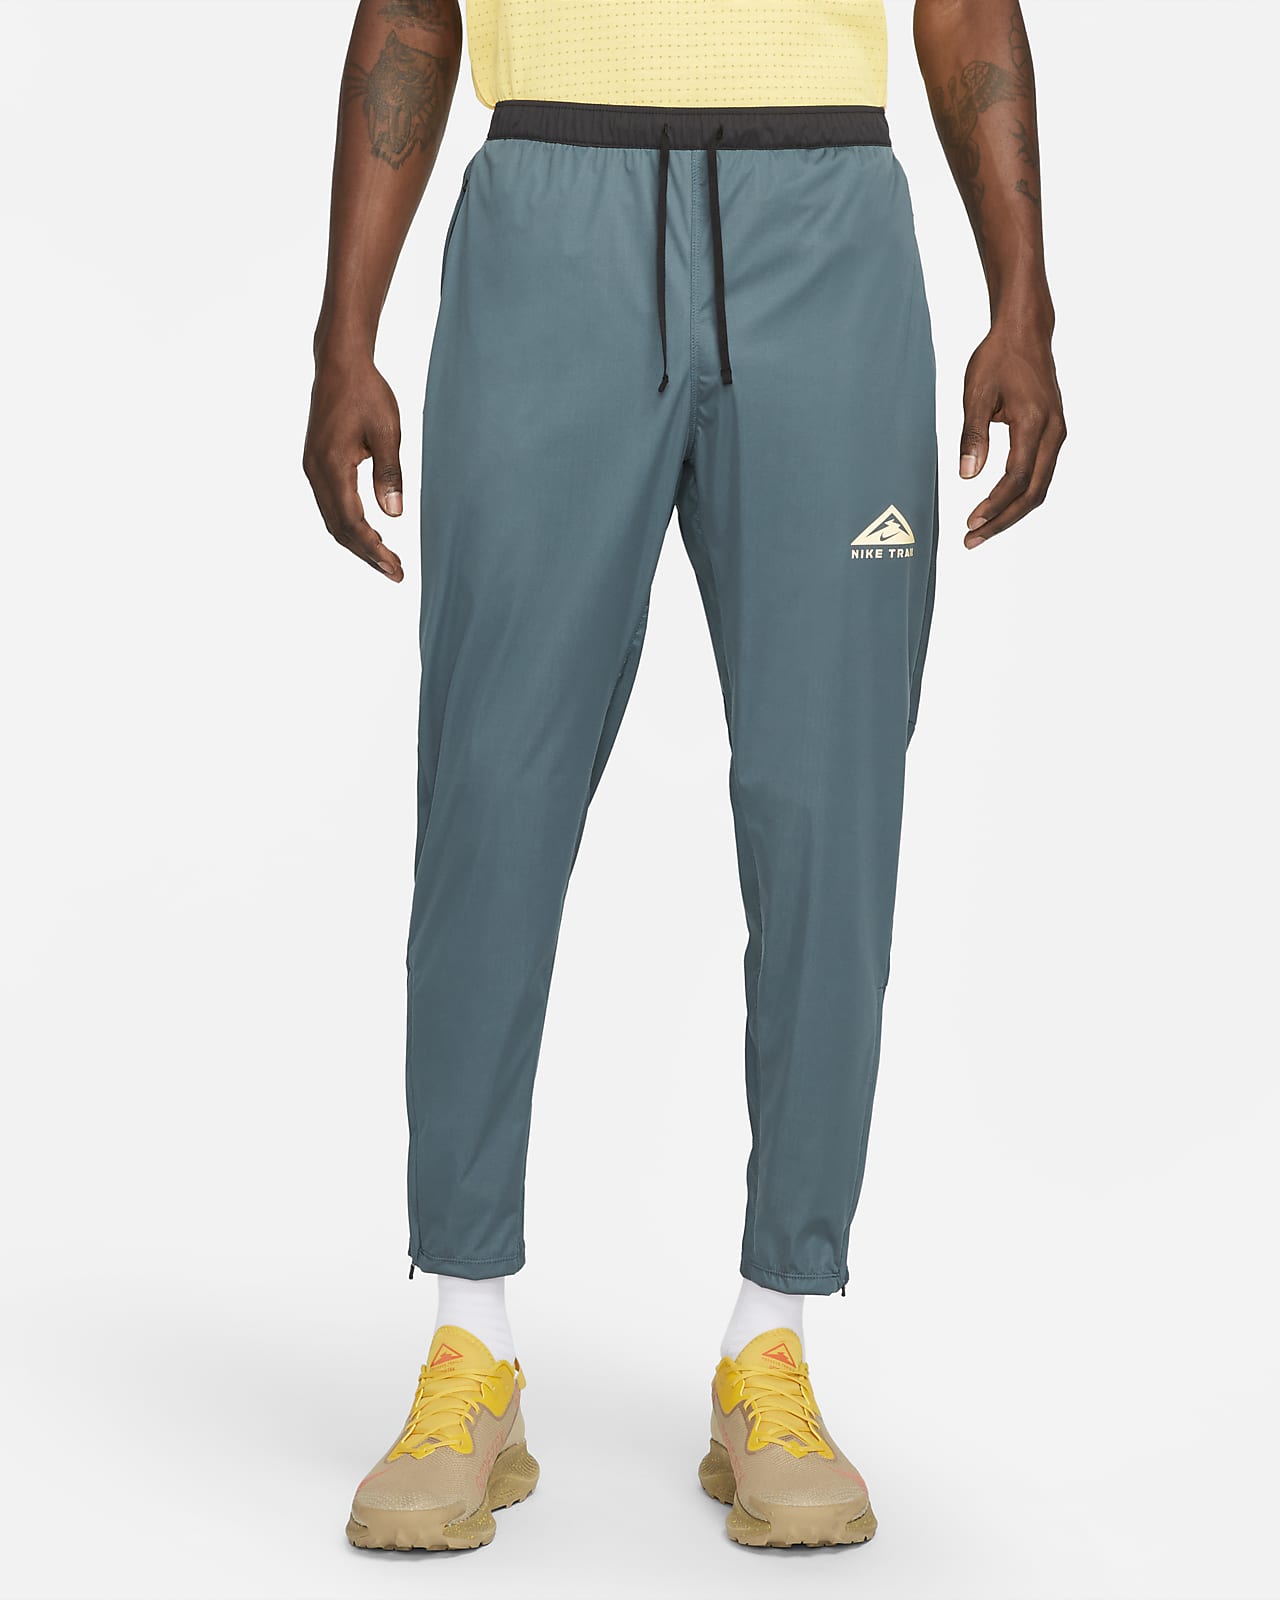 Amazon.com: Grey Nike Joggers